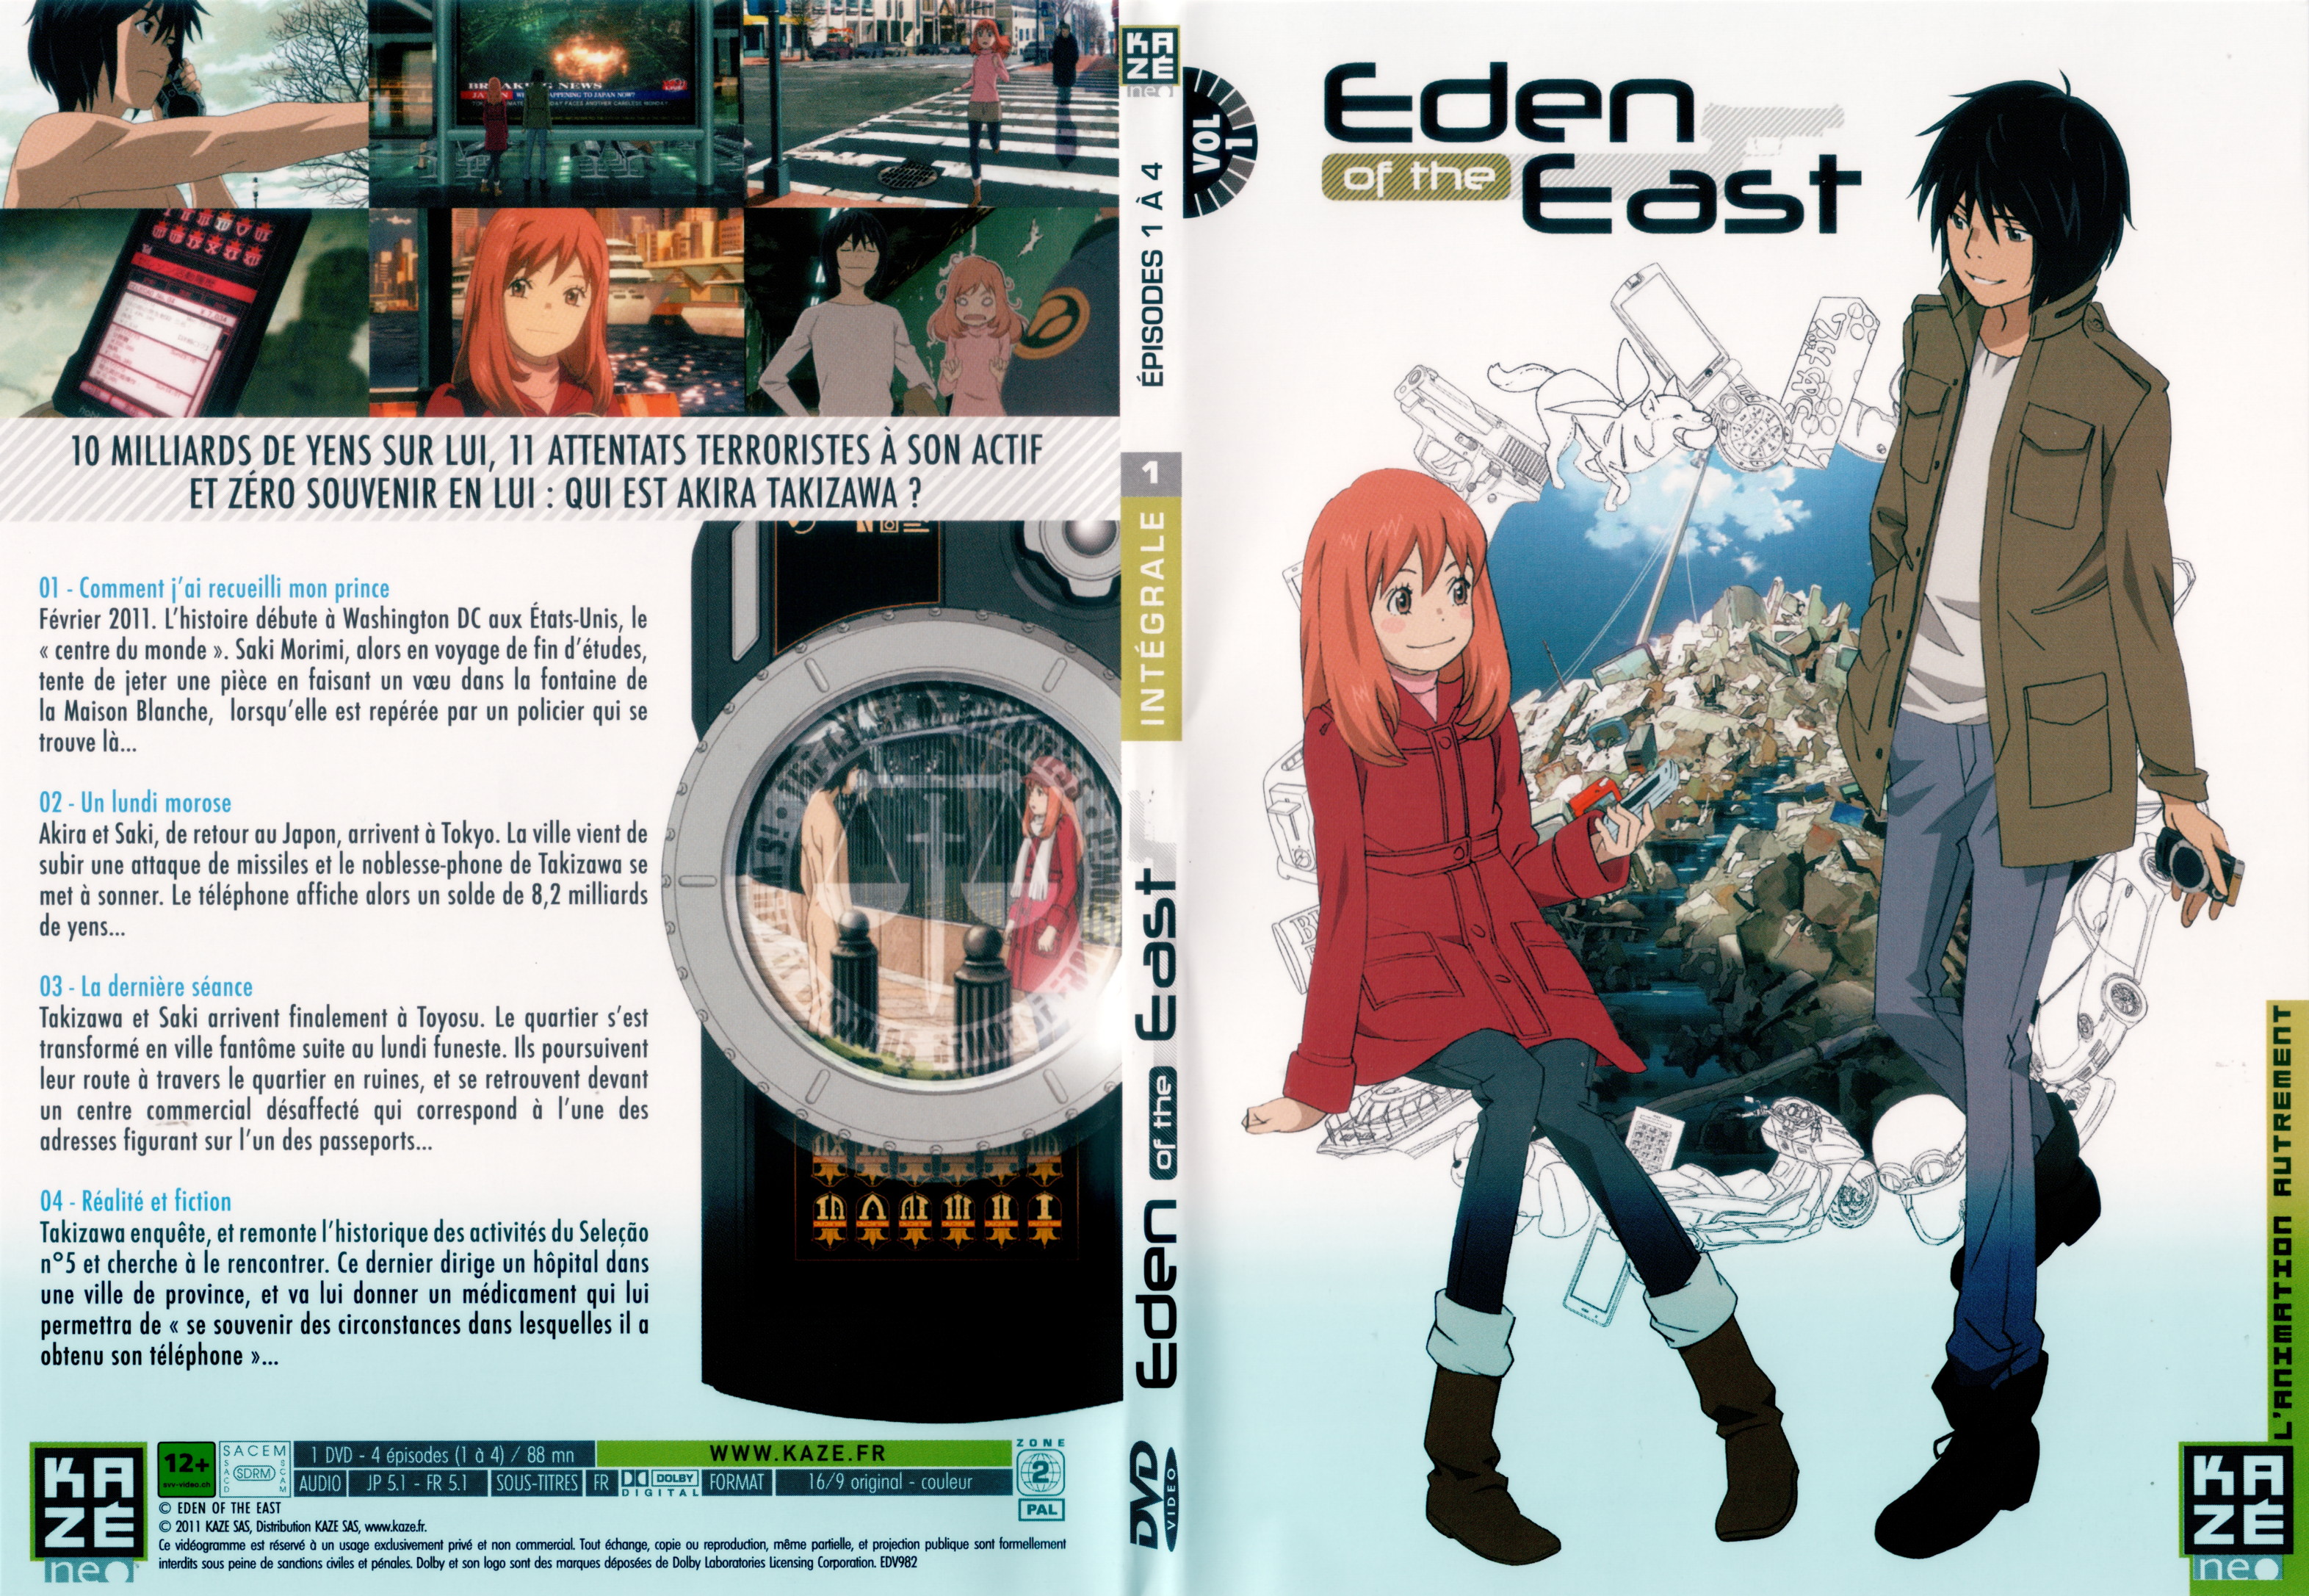 Jaquette DVD Eden of the east Intgrale vol 01